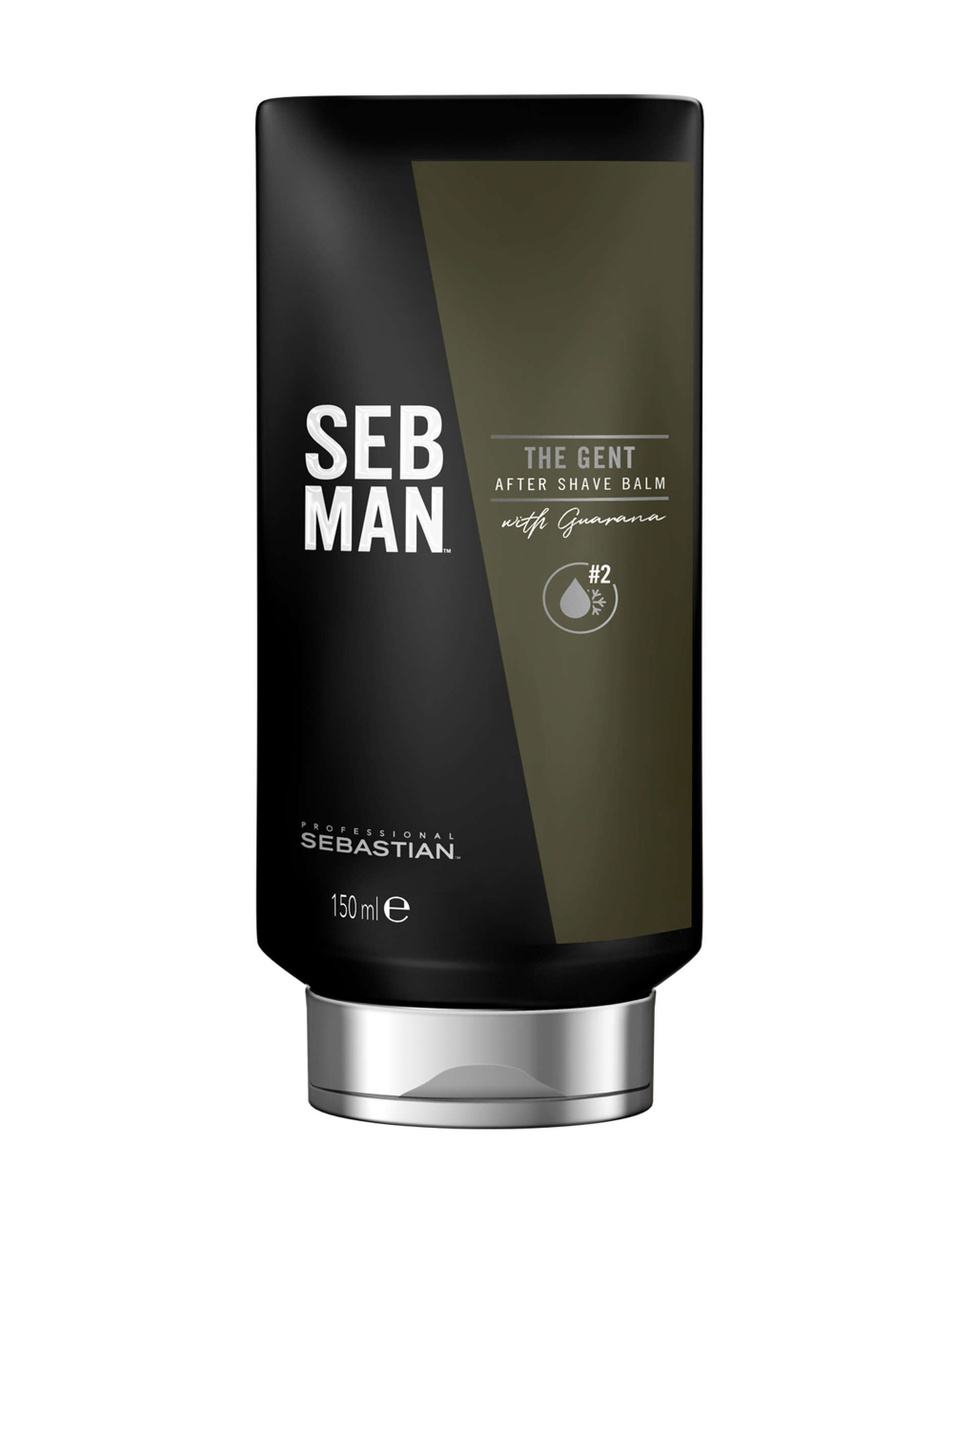 Seb Man Бальзам The Gent увлажняющий после бритья, 150 мл (цвет ), артикул 8212 | Фото 1